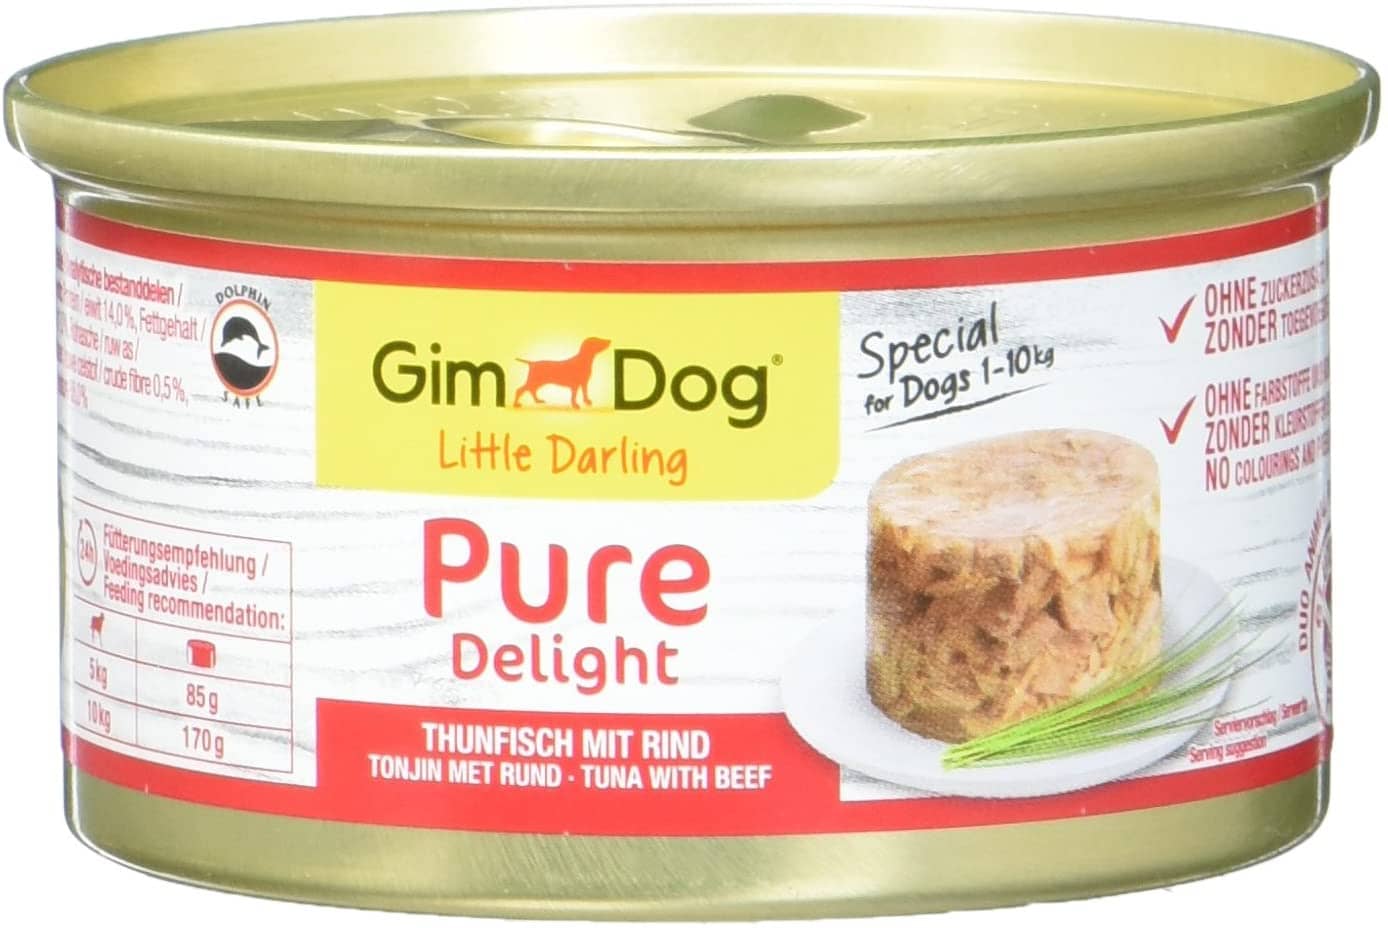 GimDog Pure Delight, tuna with beef